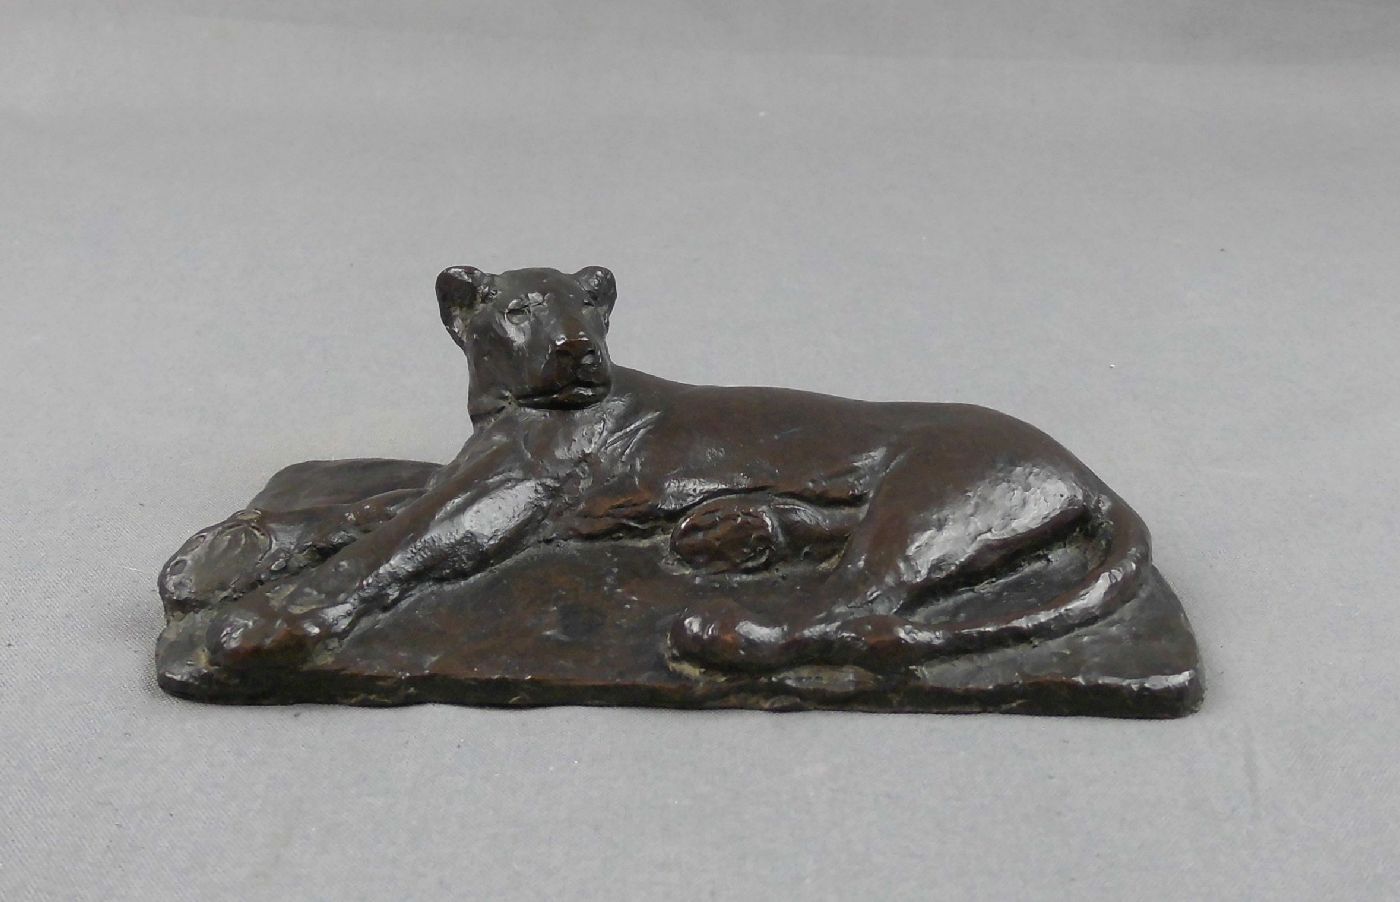 GAUL, AUGUST (Großauheim b. Hanau 1869-1921 Berlin), Skulptur: "Liegende Löwin", Bronze, dunkelbraun